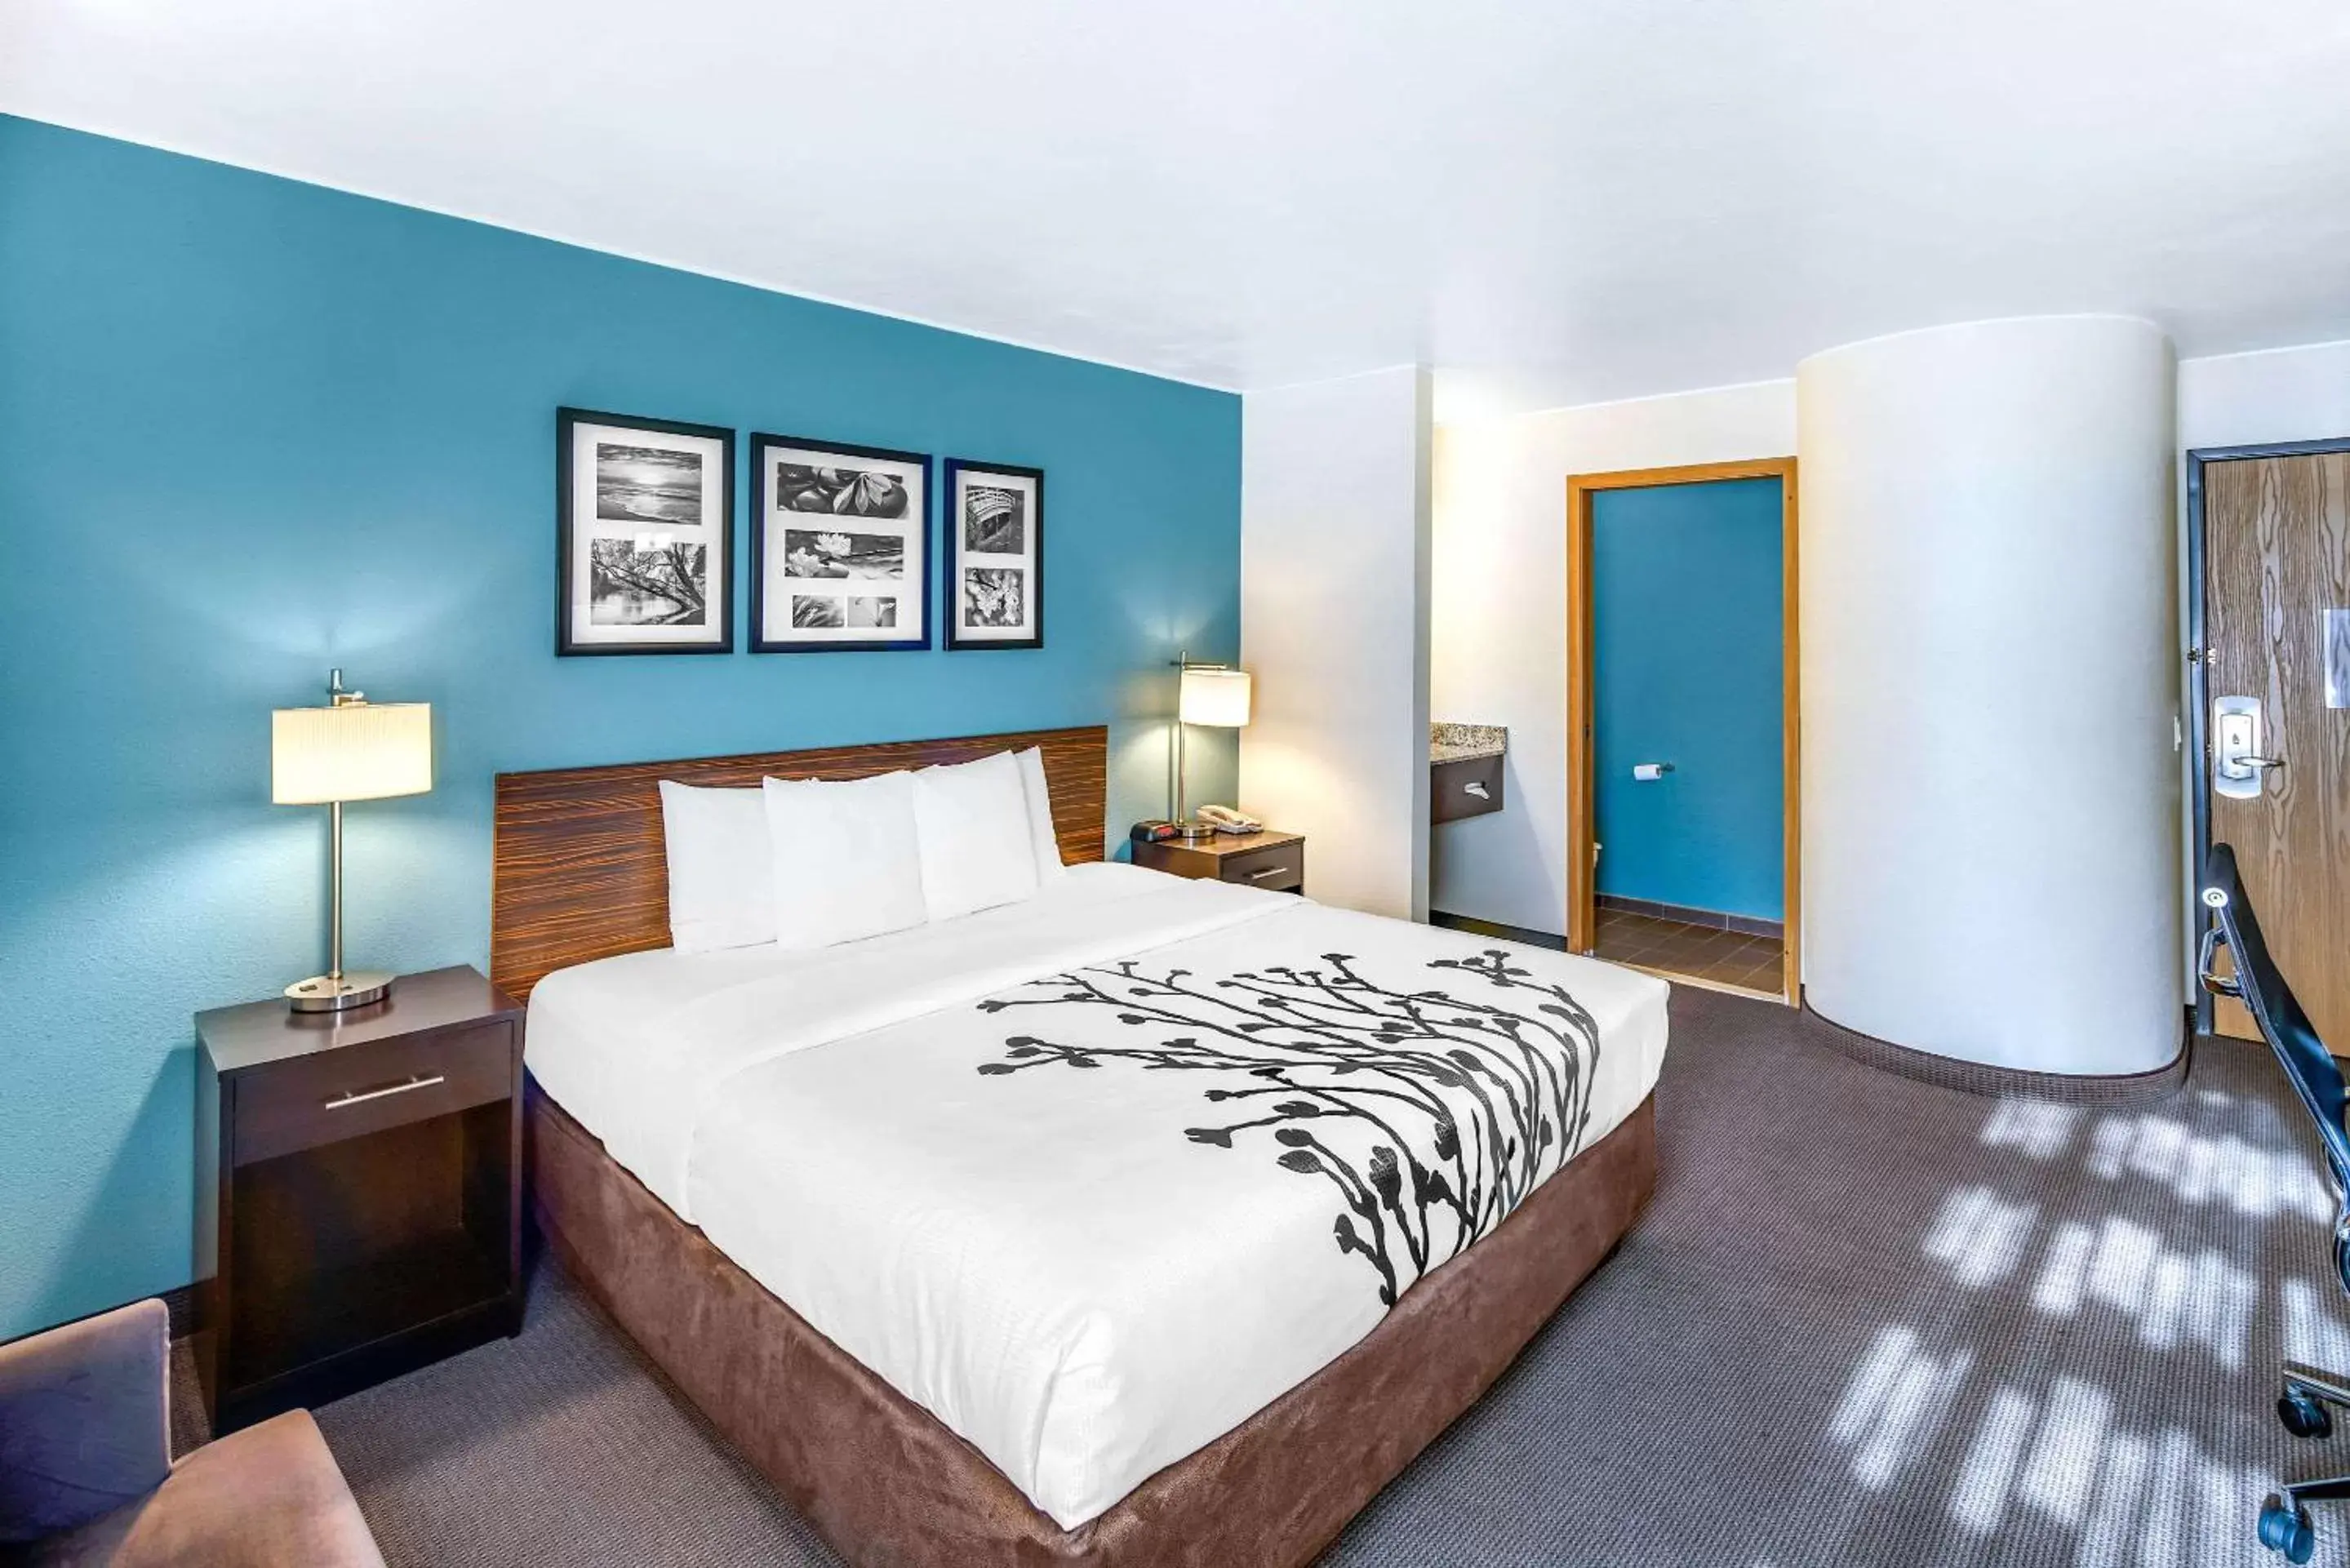 Photo of the whole room, Bed in Sleep Inn near Washington State Line